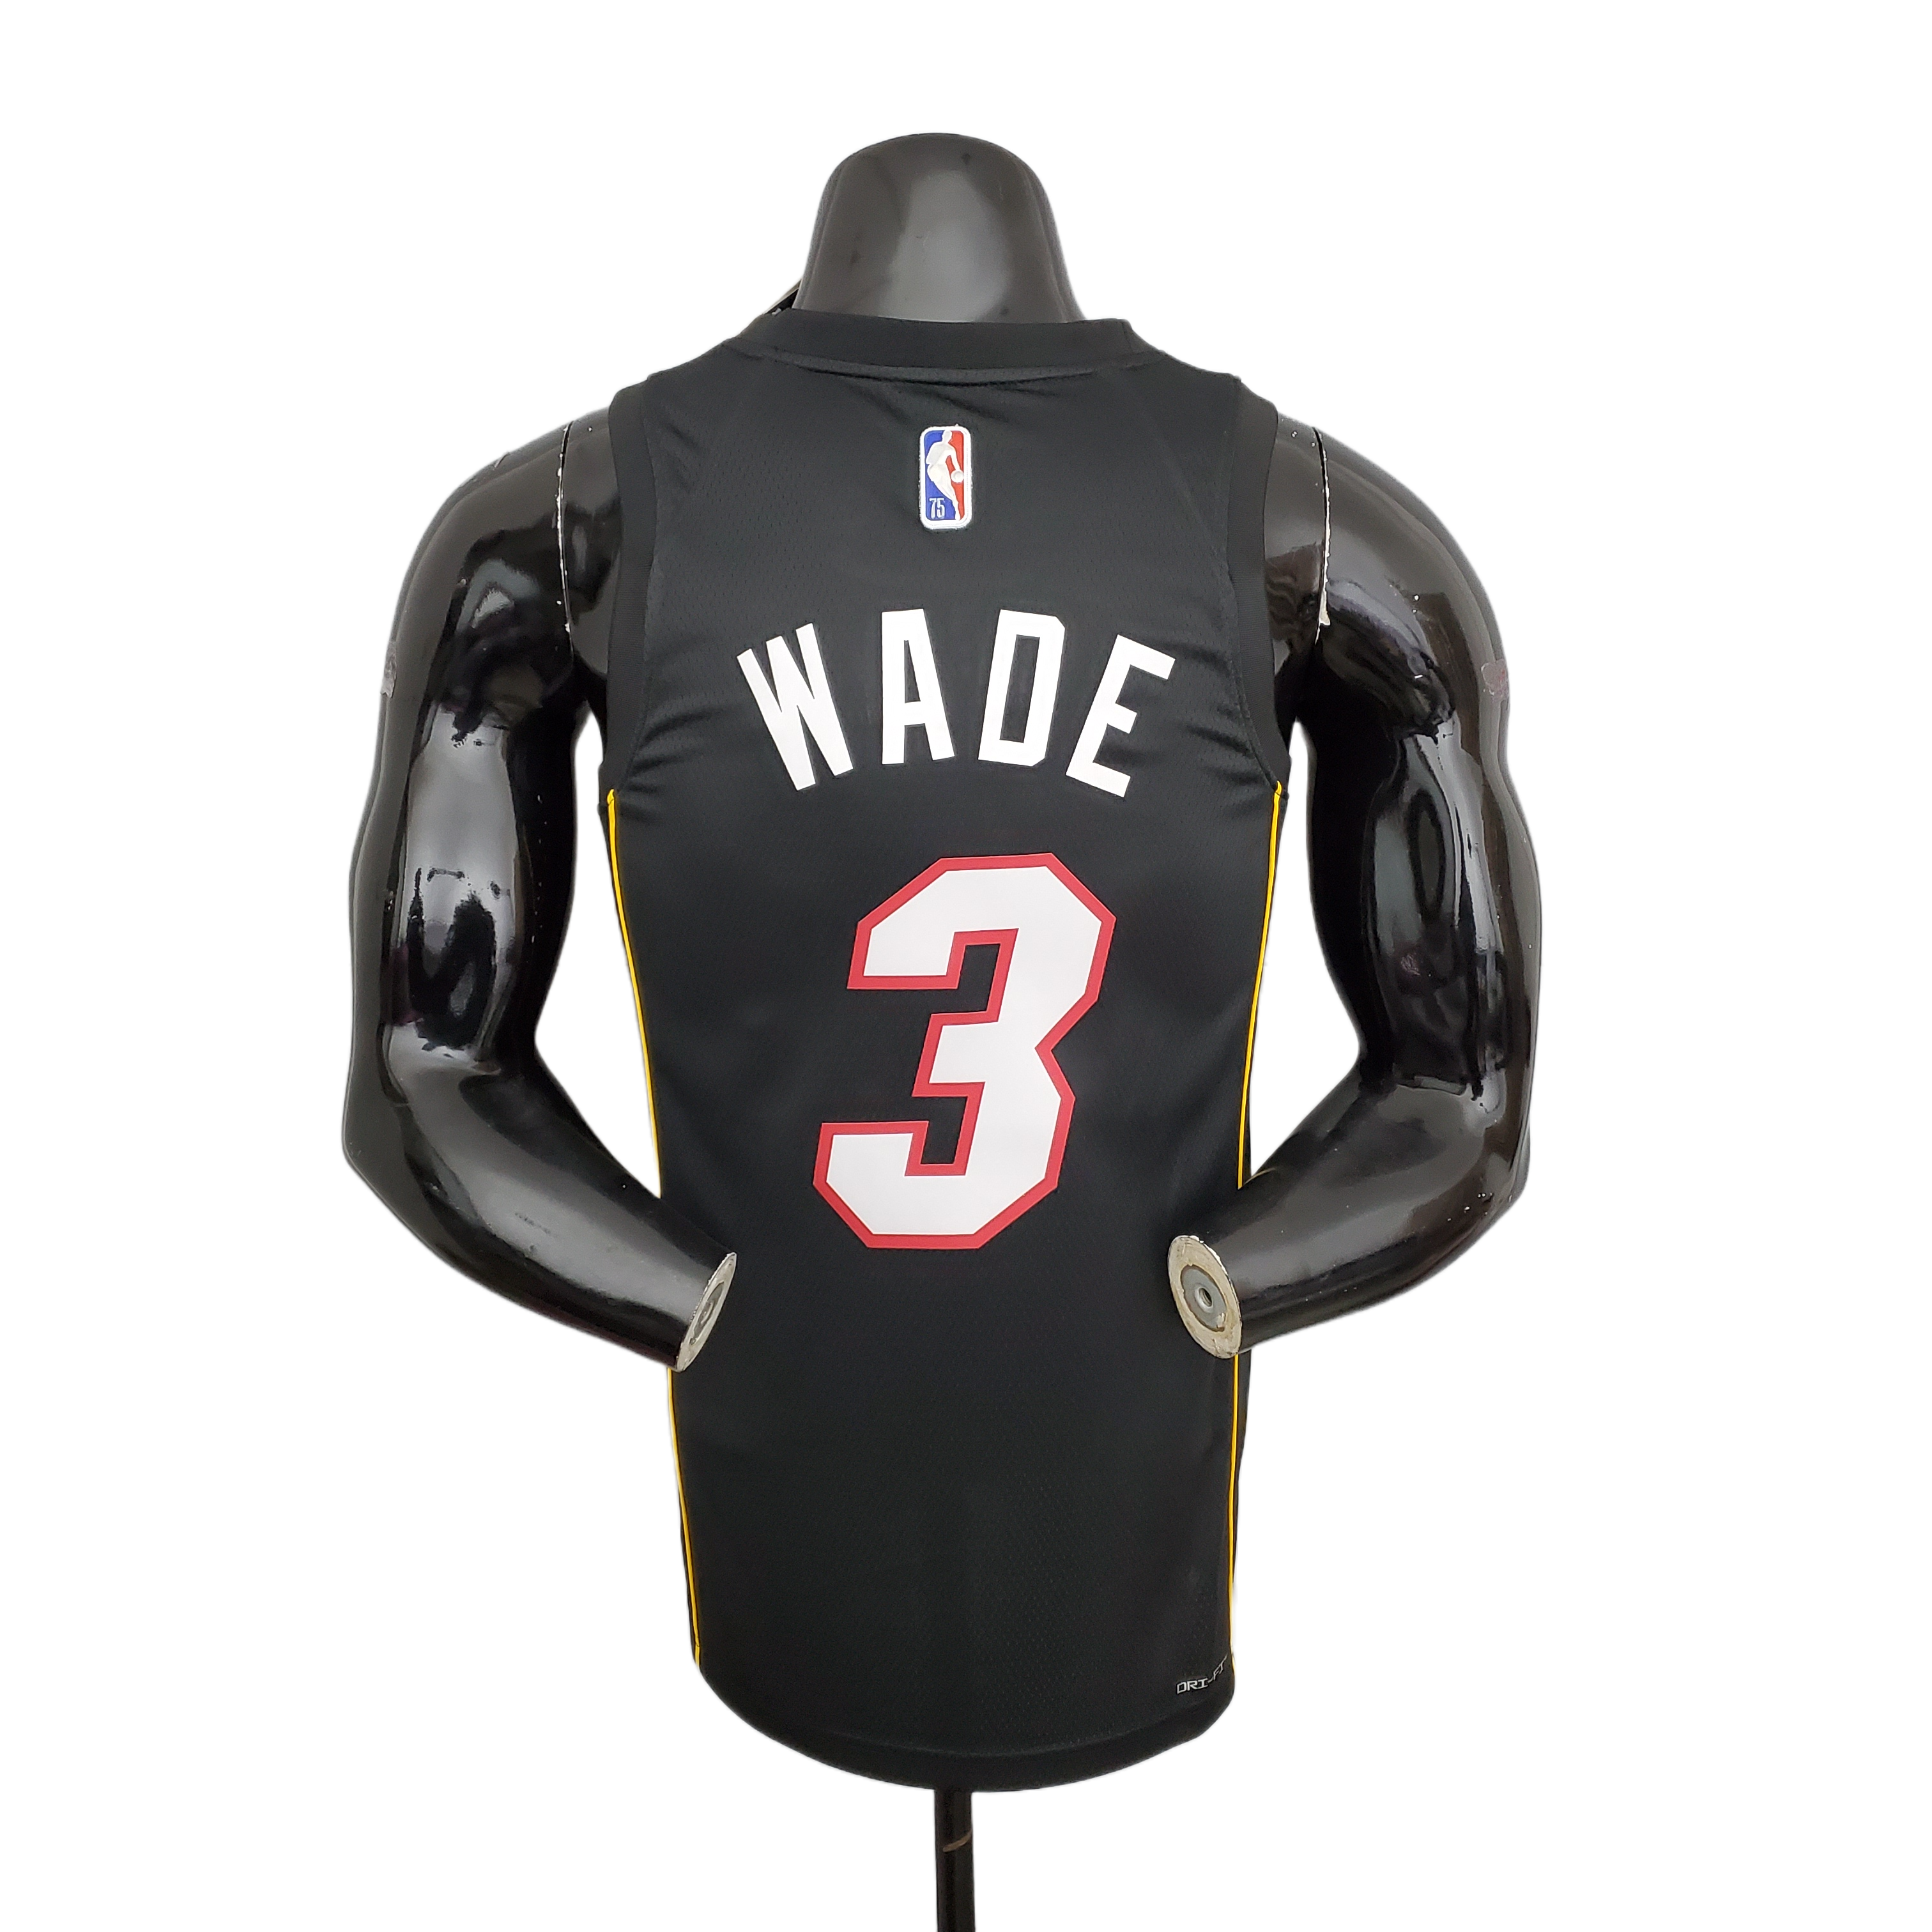 Back Dwayne Wade Miami Heat